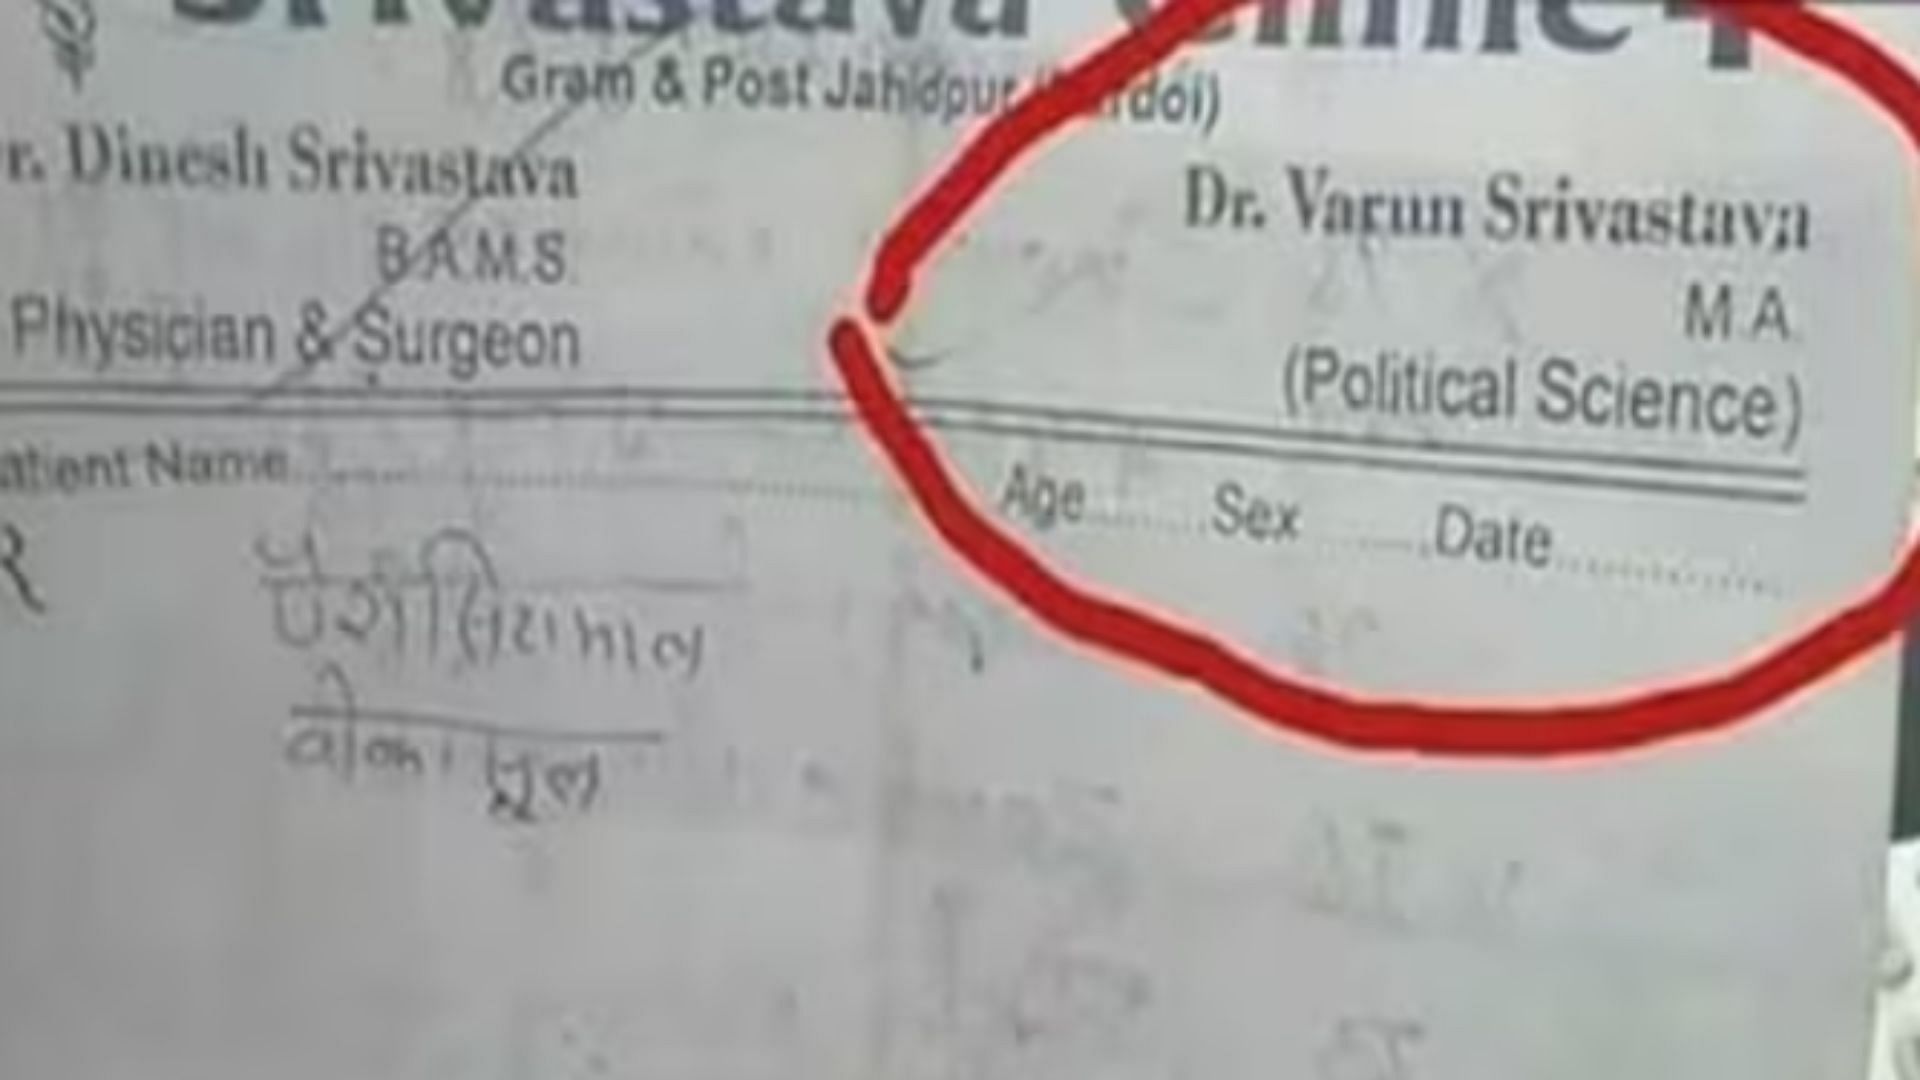 Hardoi fake doctor prescription letter going viral fake doctor with degree in political science